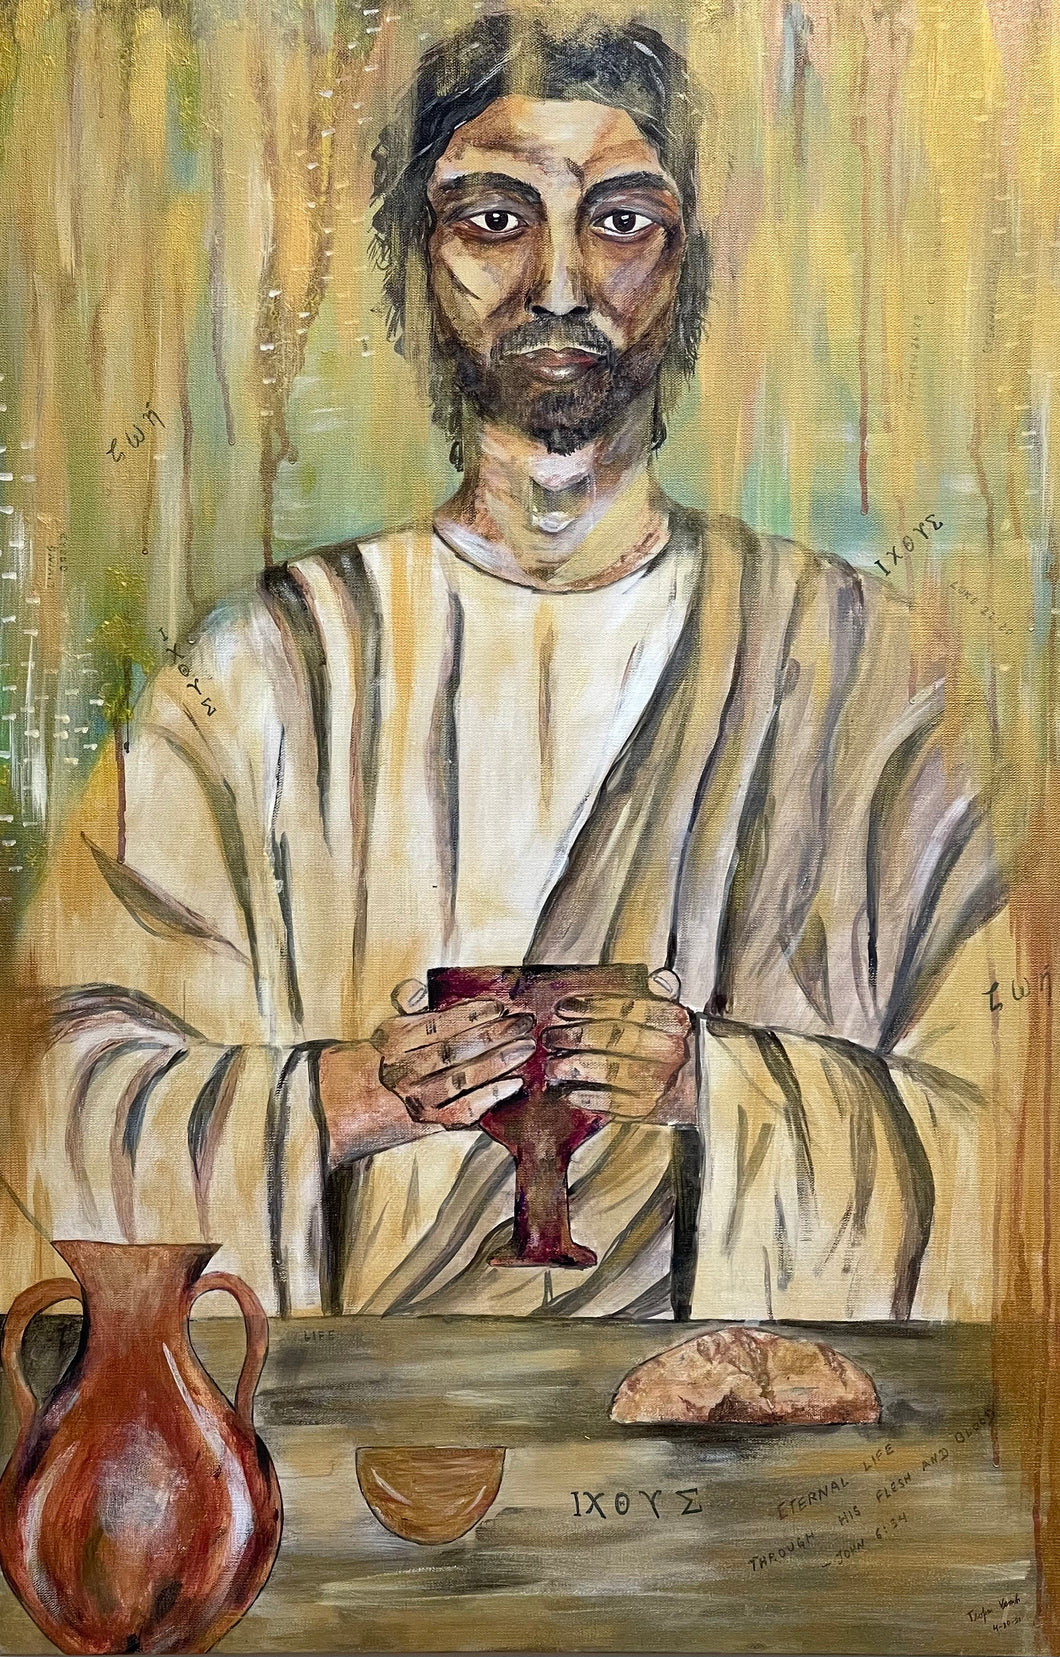 Communion — Original painting of Jesus Christ by August Venuh